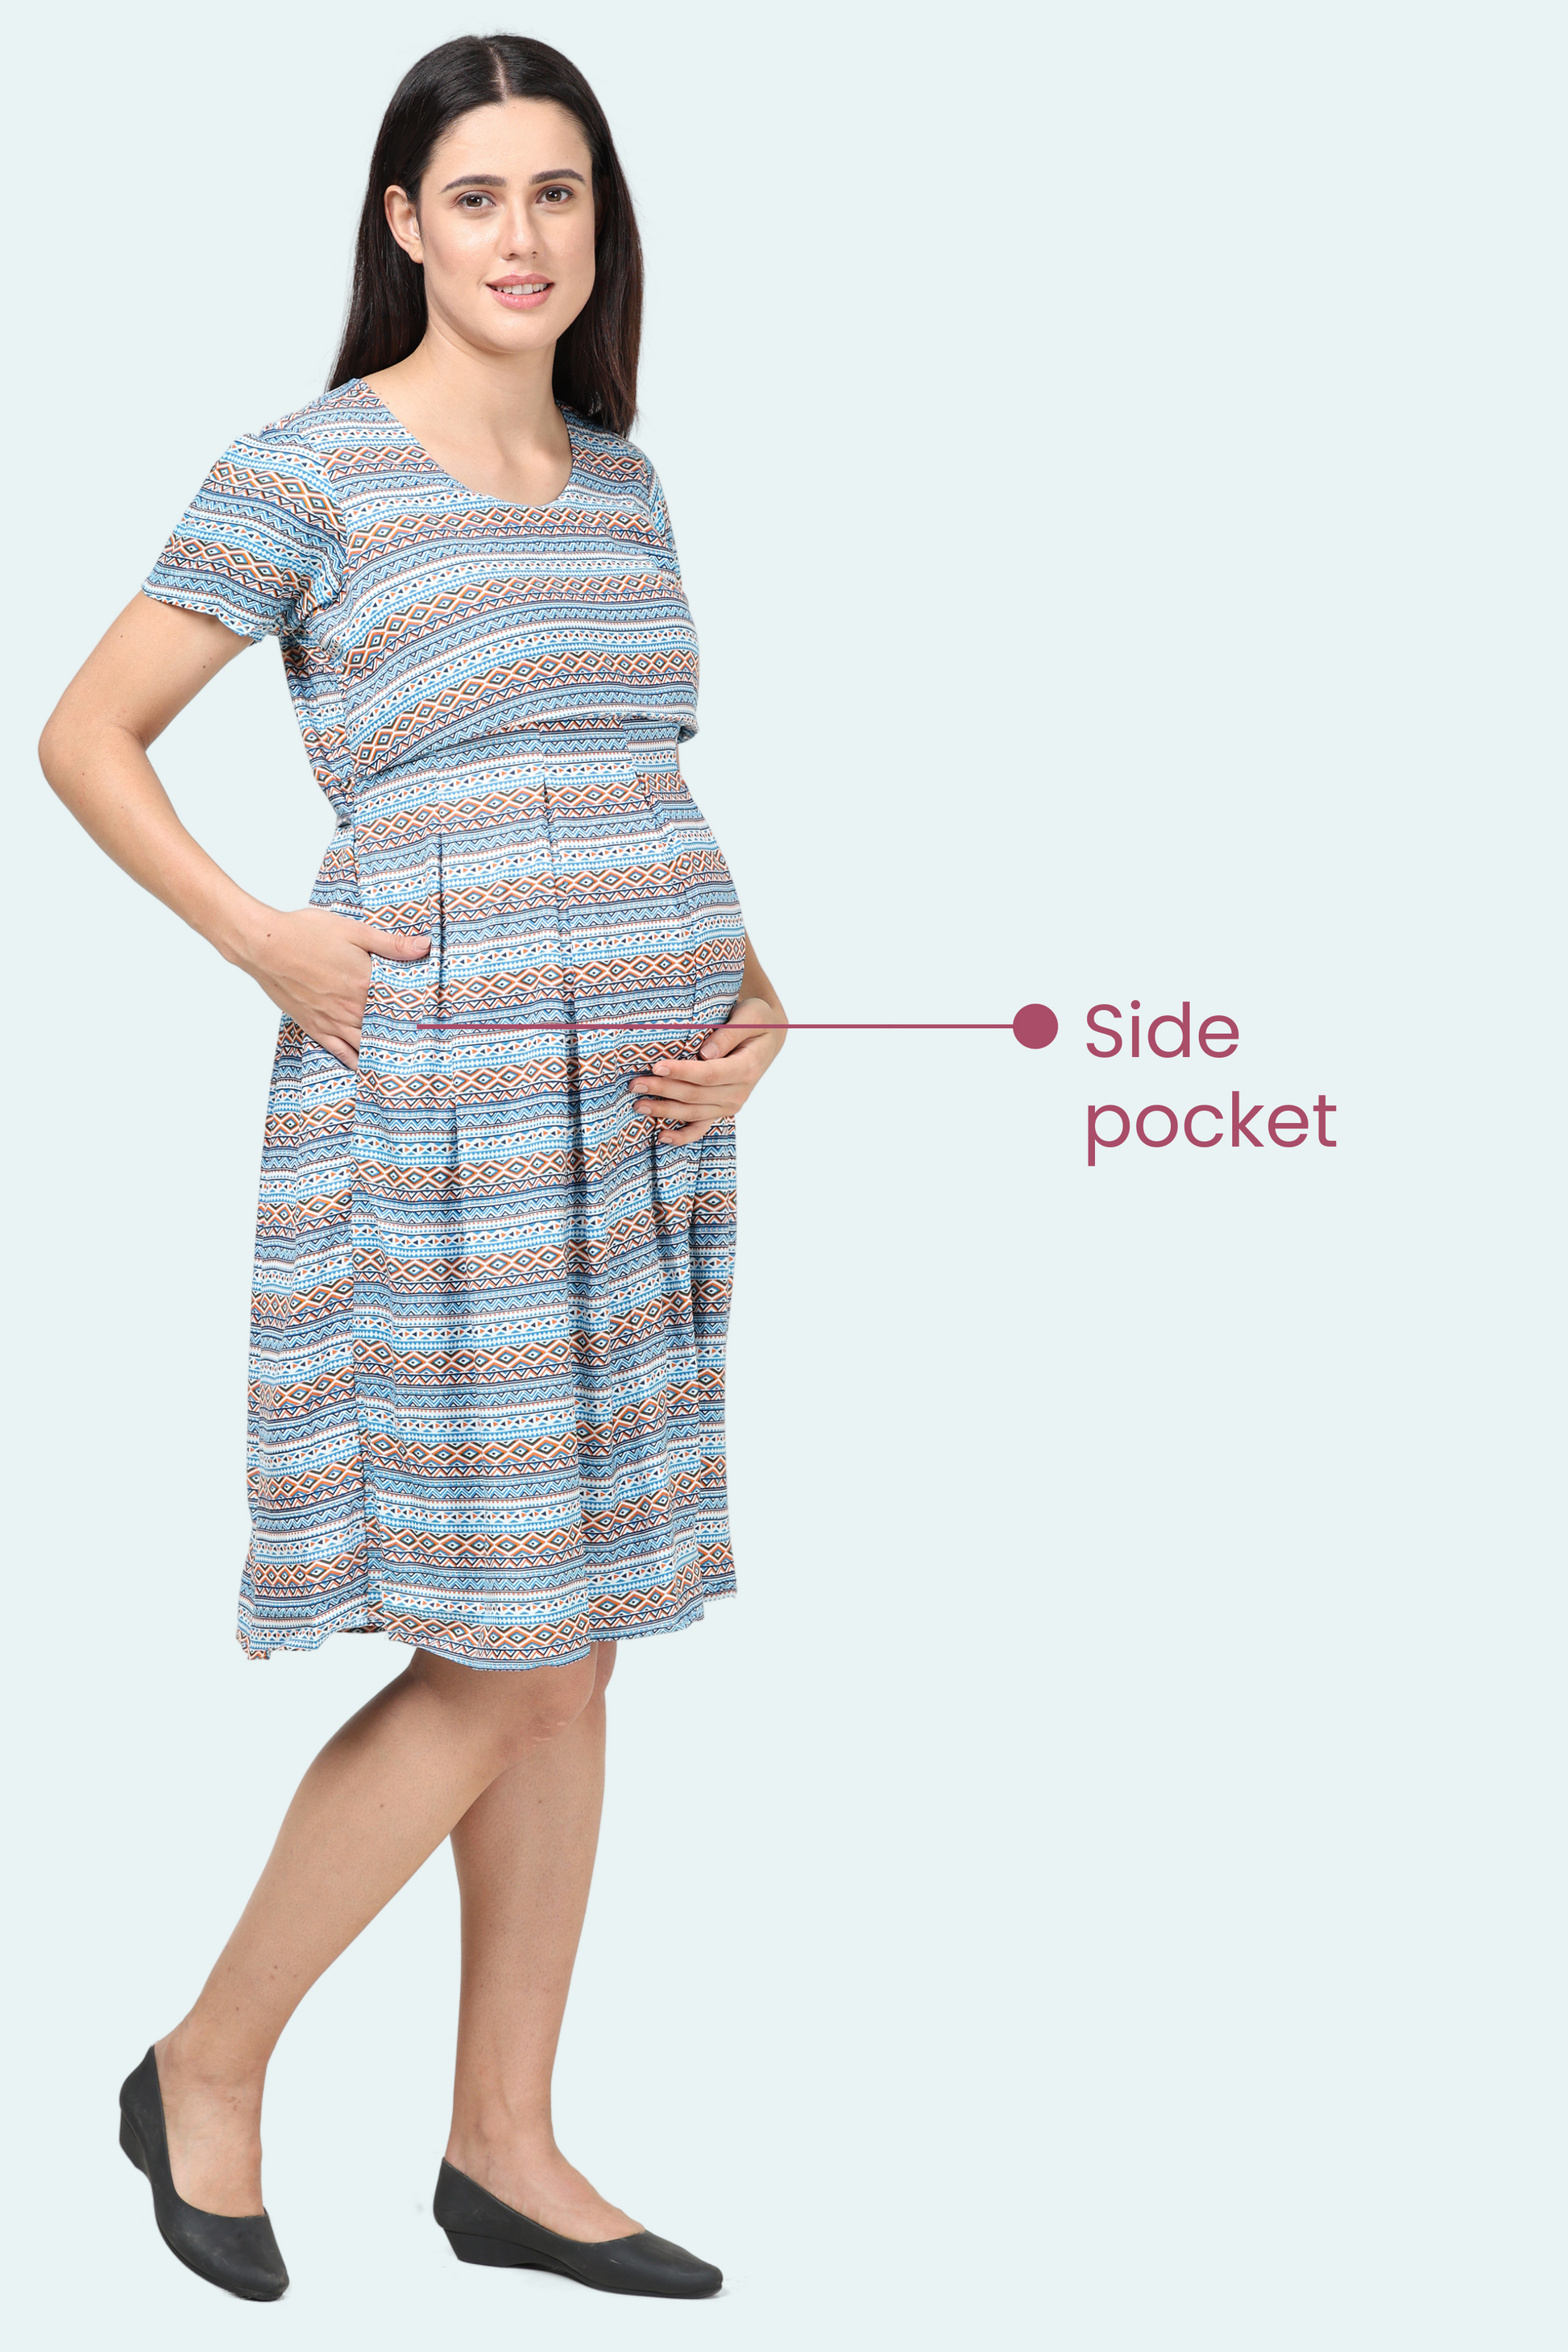 Pregnancy Dress With side Pocket